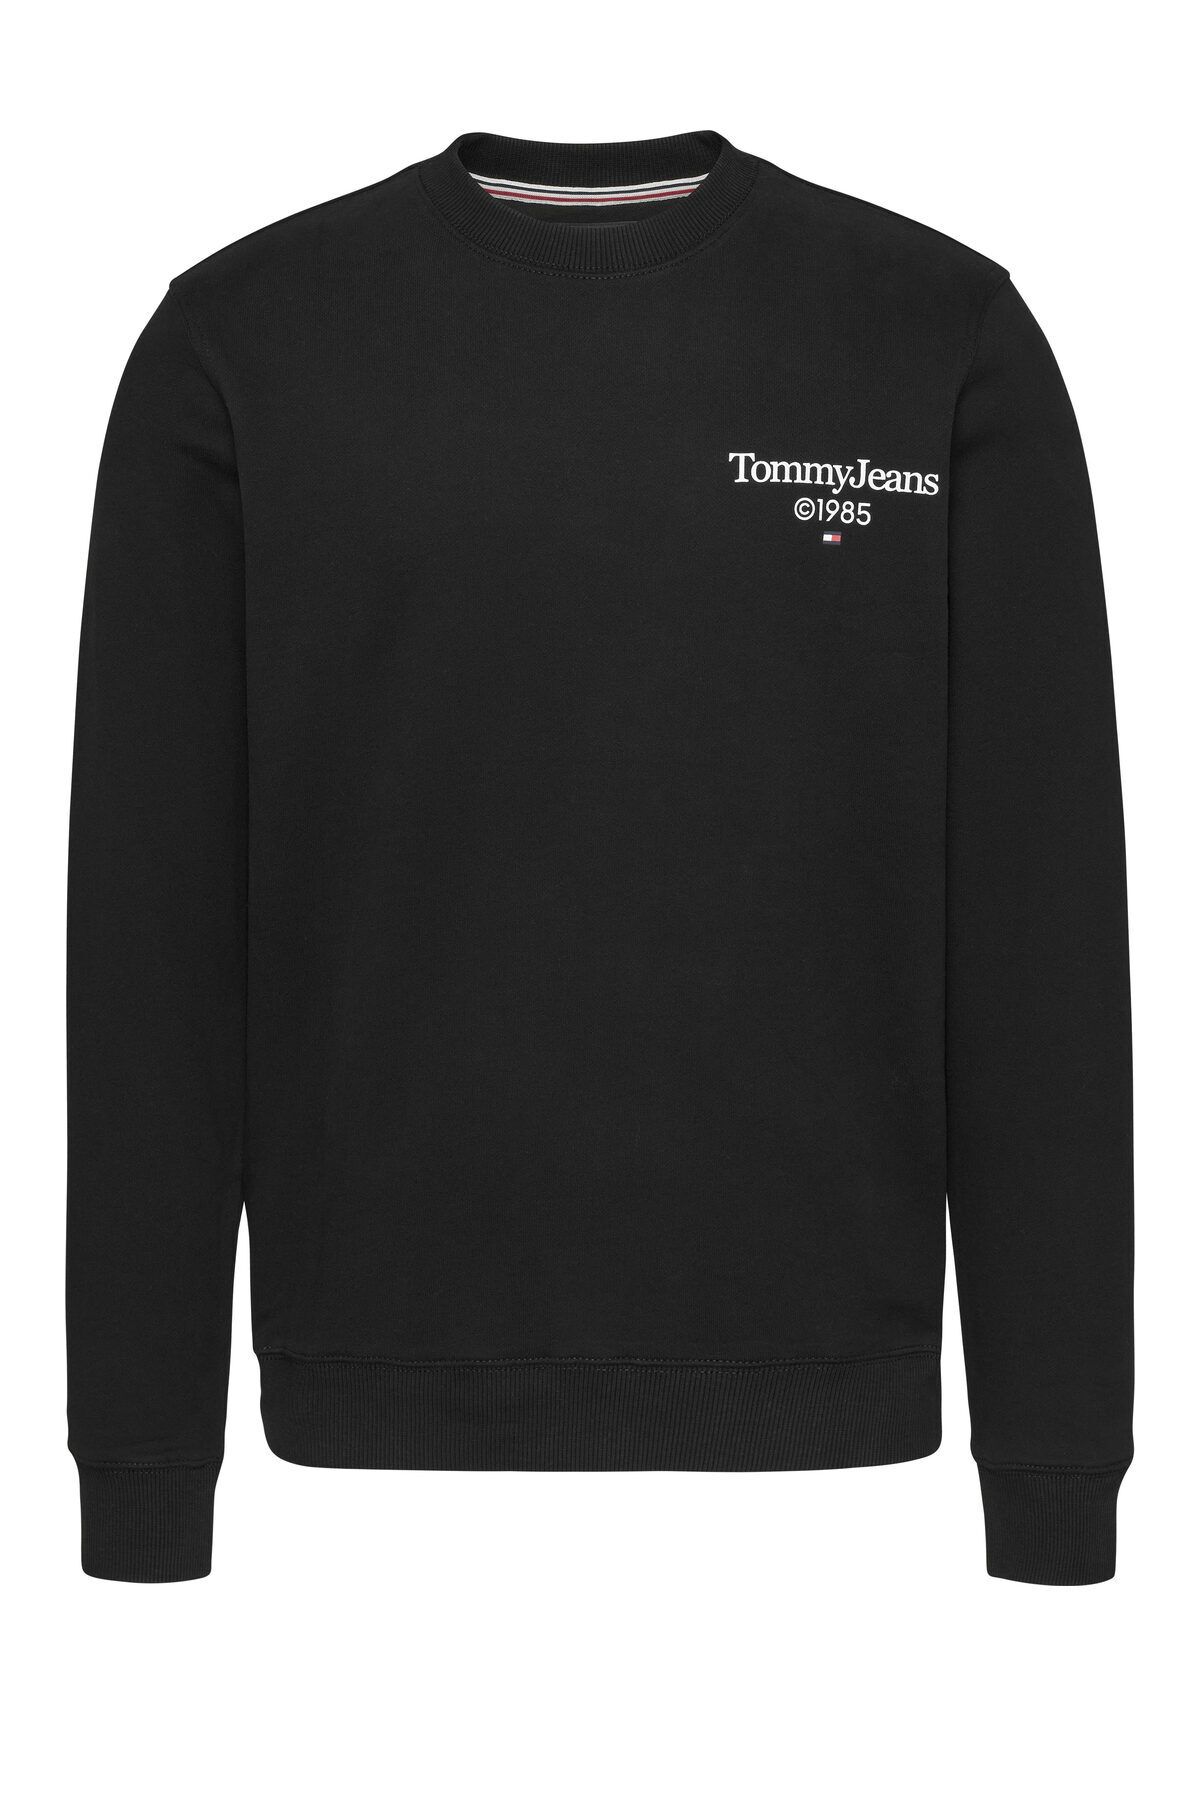 Tommy Hilfiger Black Sweatshirt For Erkek